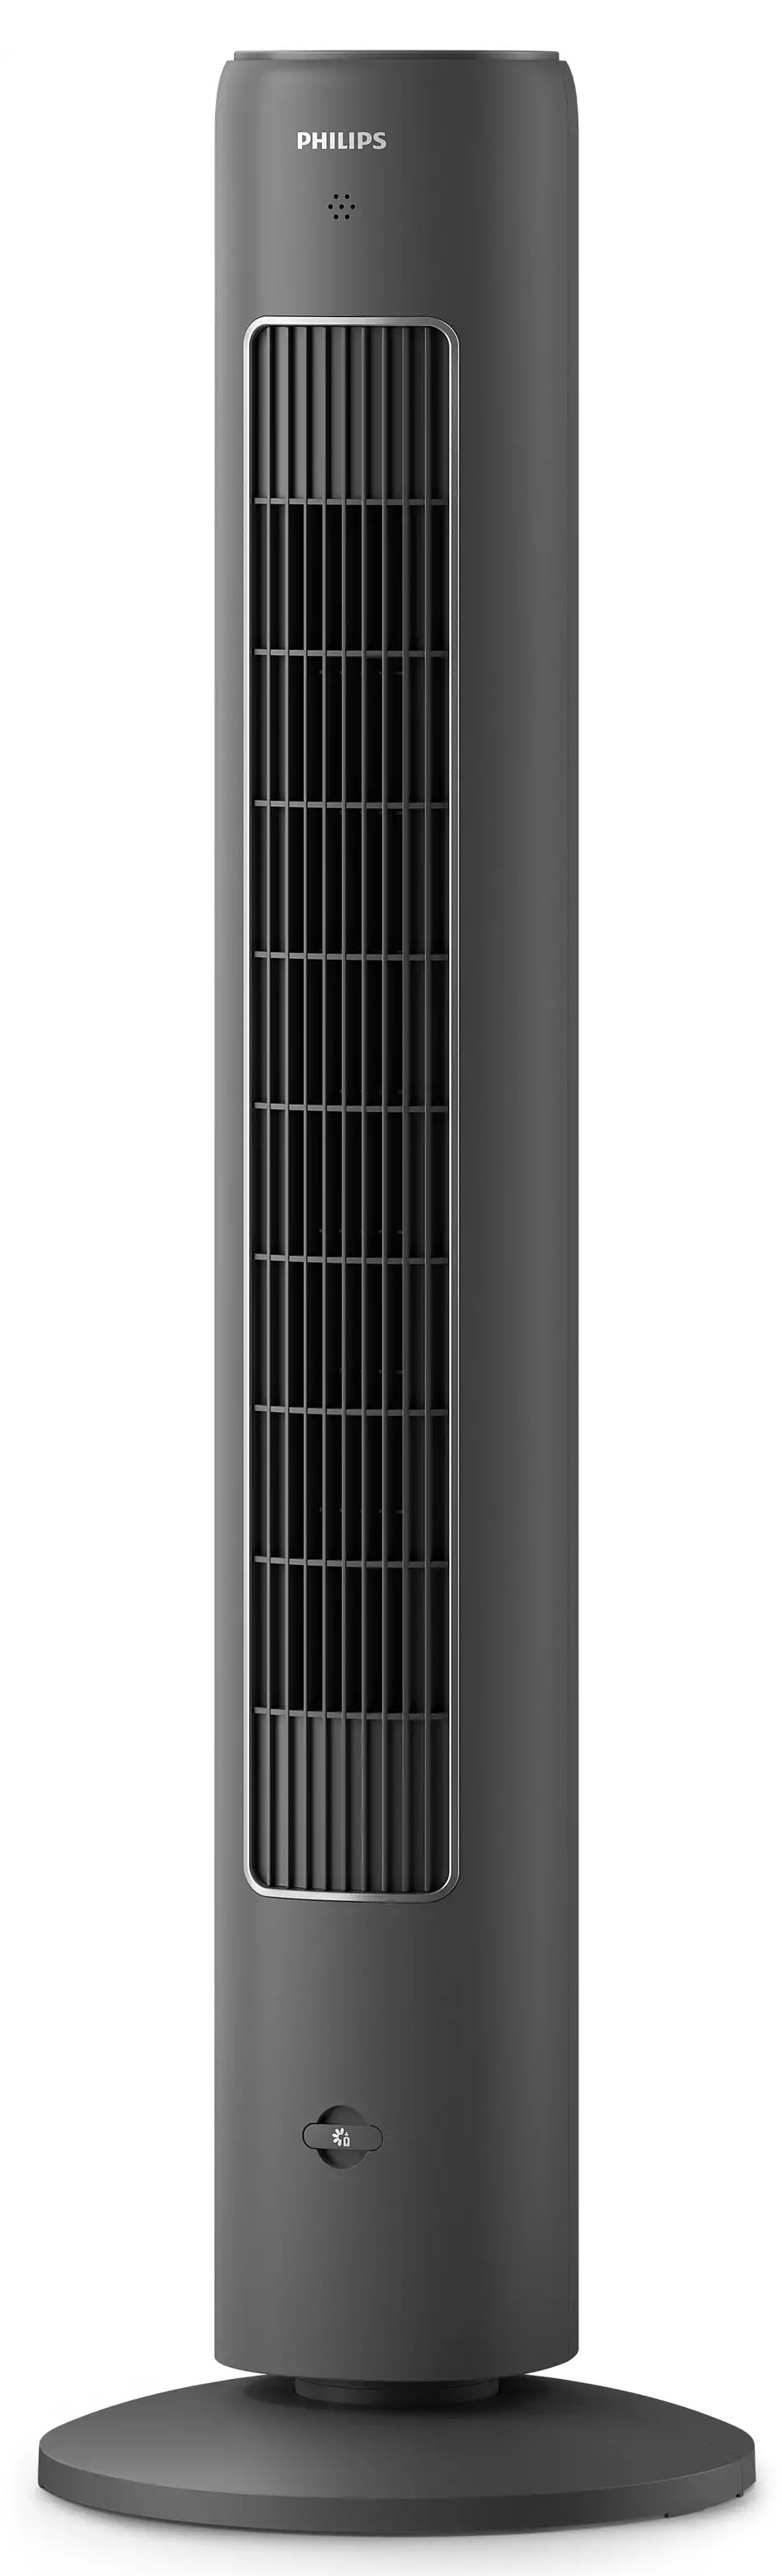 Вентилятор Philips CX5535/11 в интернет-магазине, главное фото